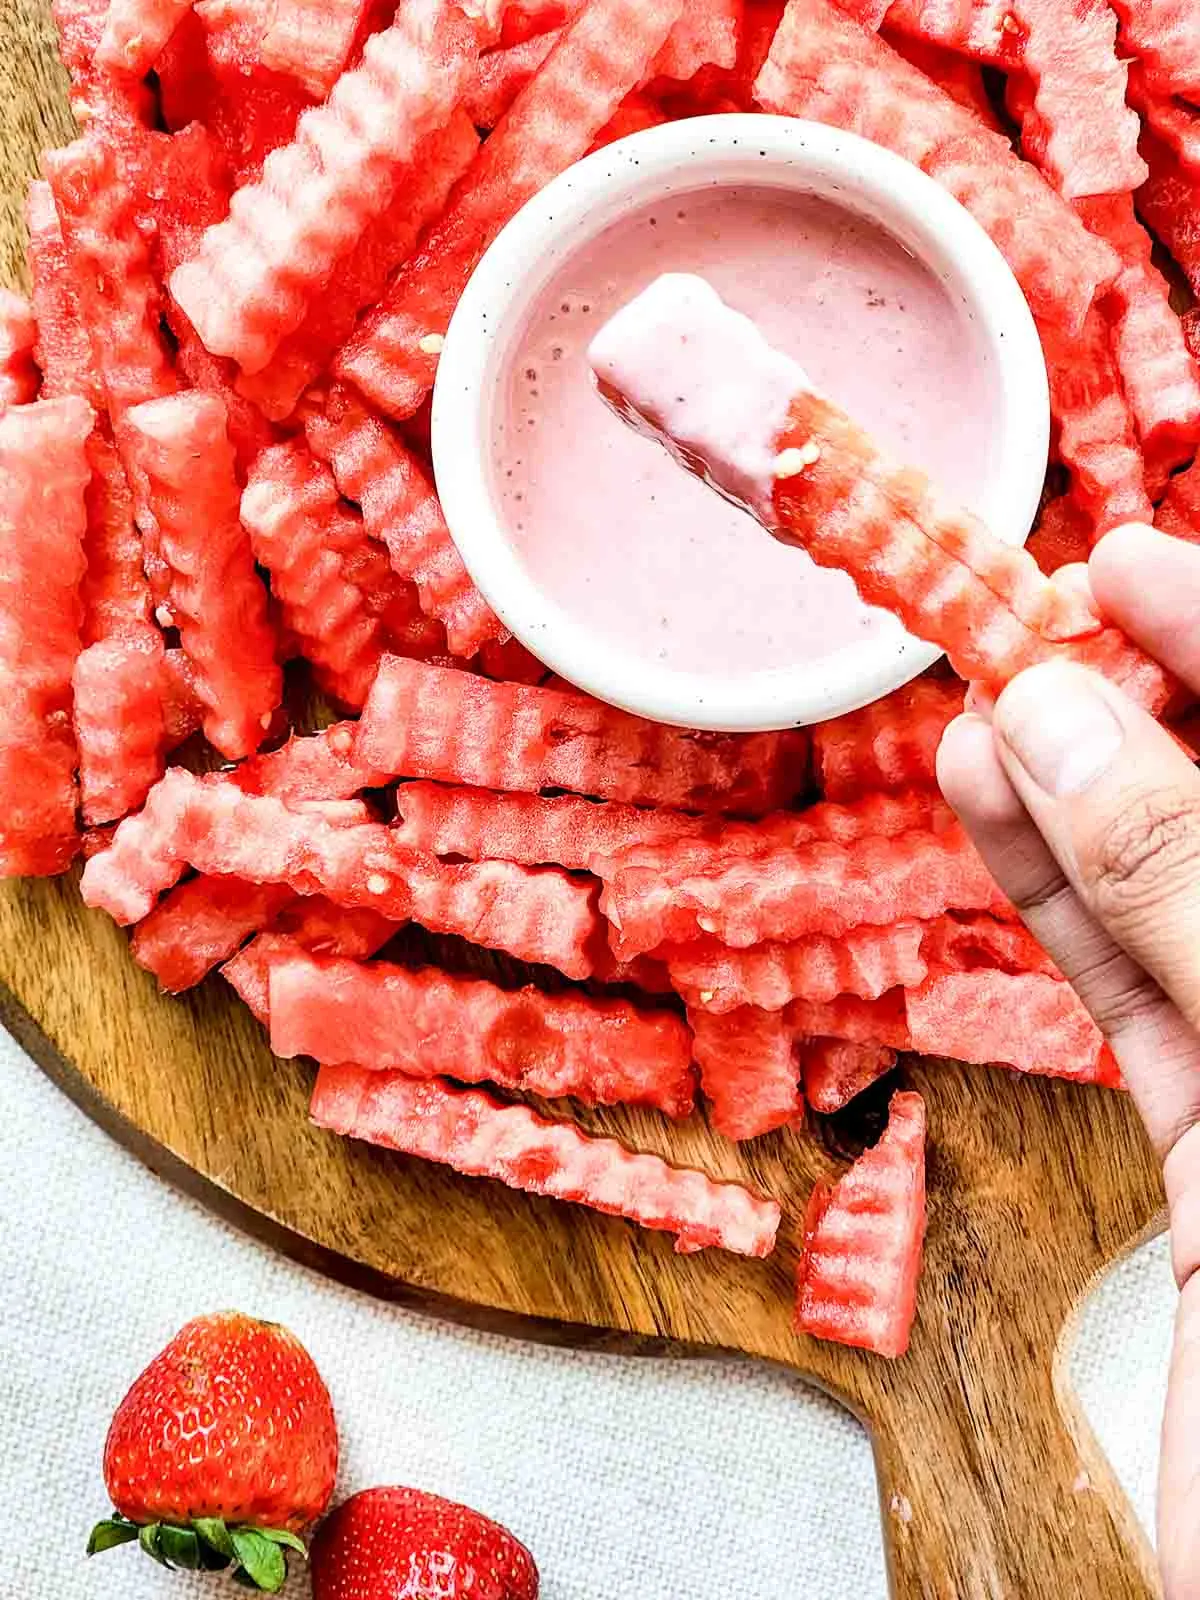 Hand dipping watermelon fry into strawberry yogurt dip